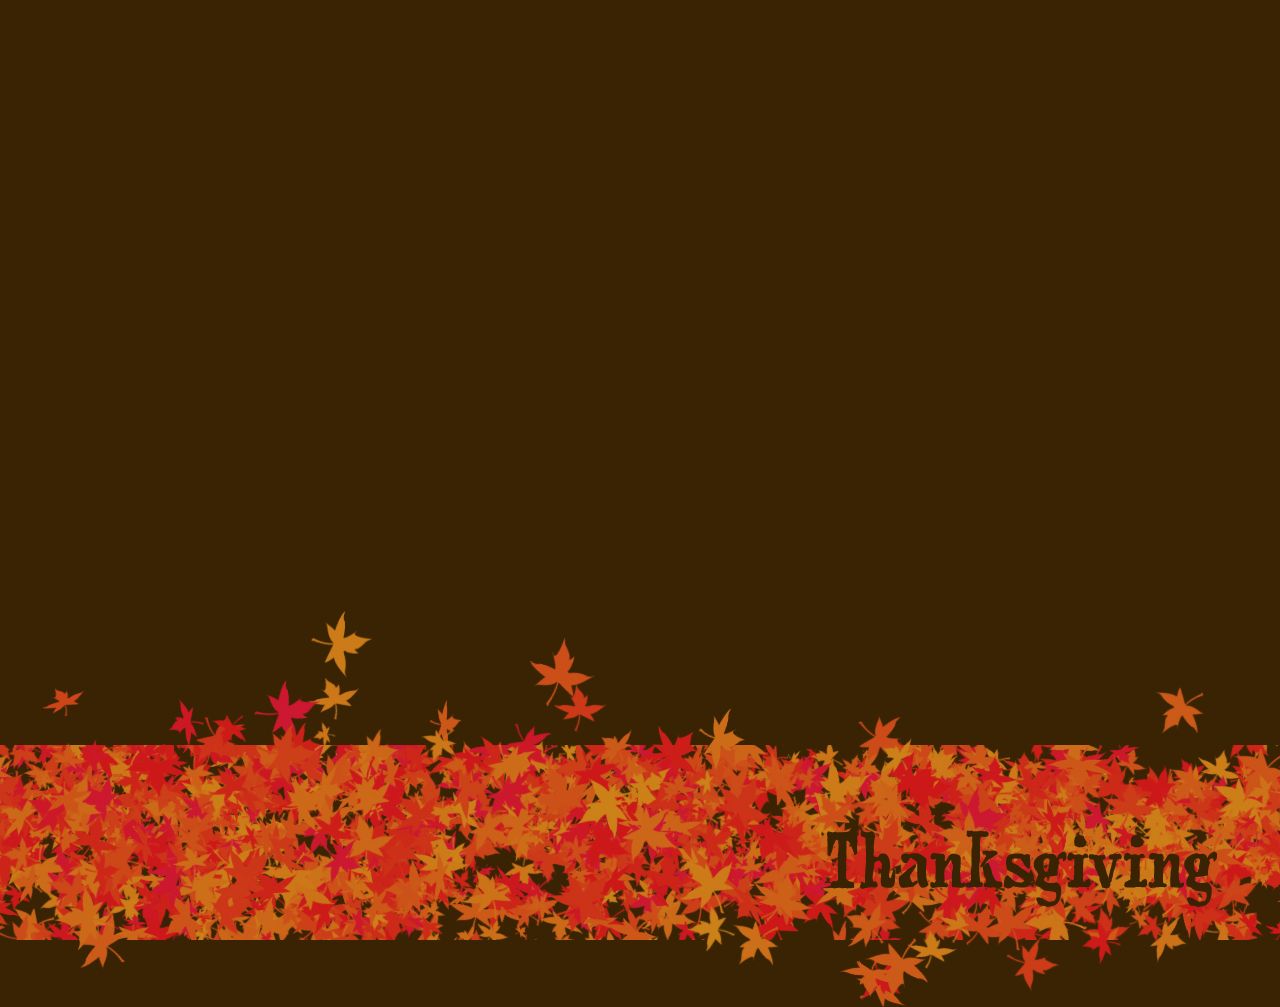 HD wallpaper, Thanksgiving, Background